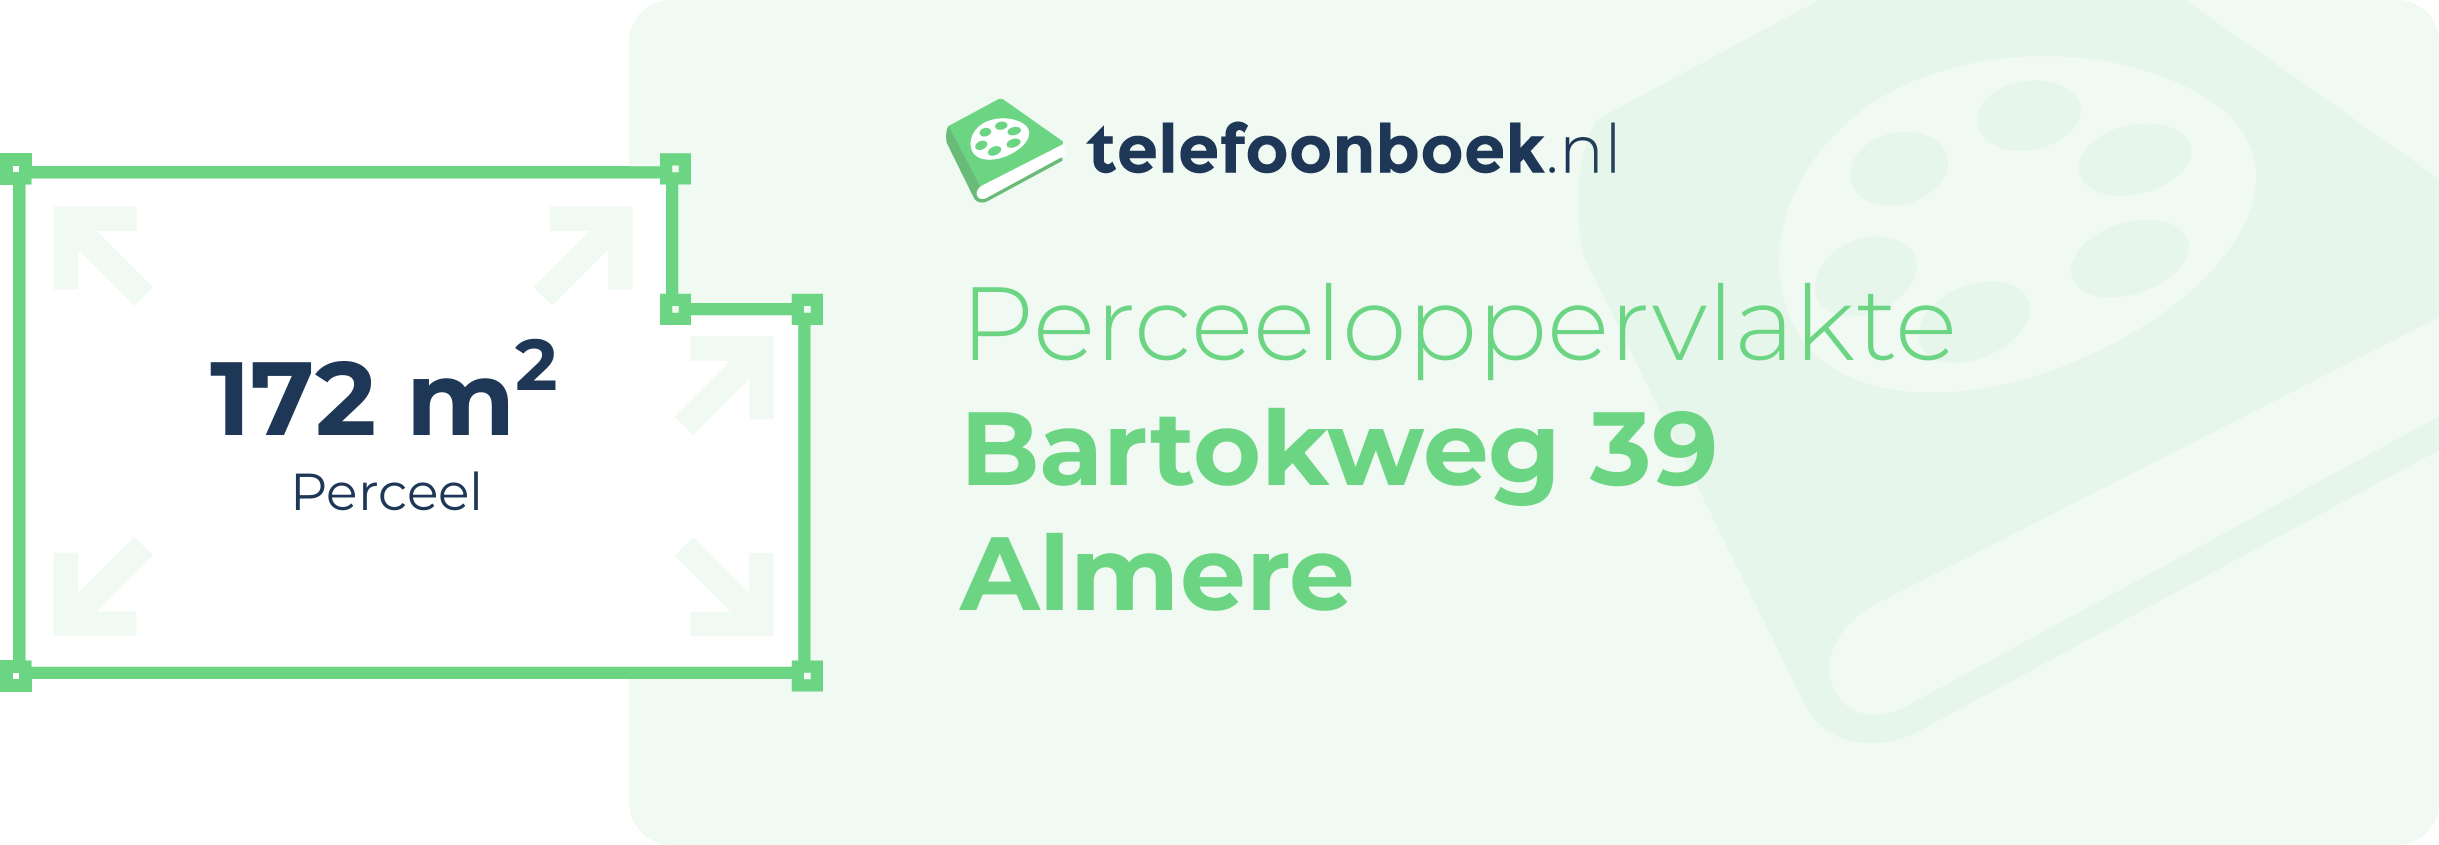 Perceeloppervlakte Bartokweg 39 Almere